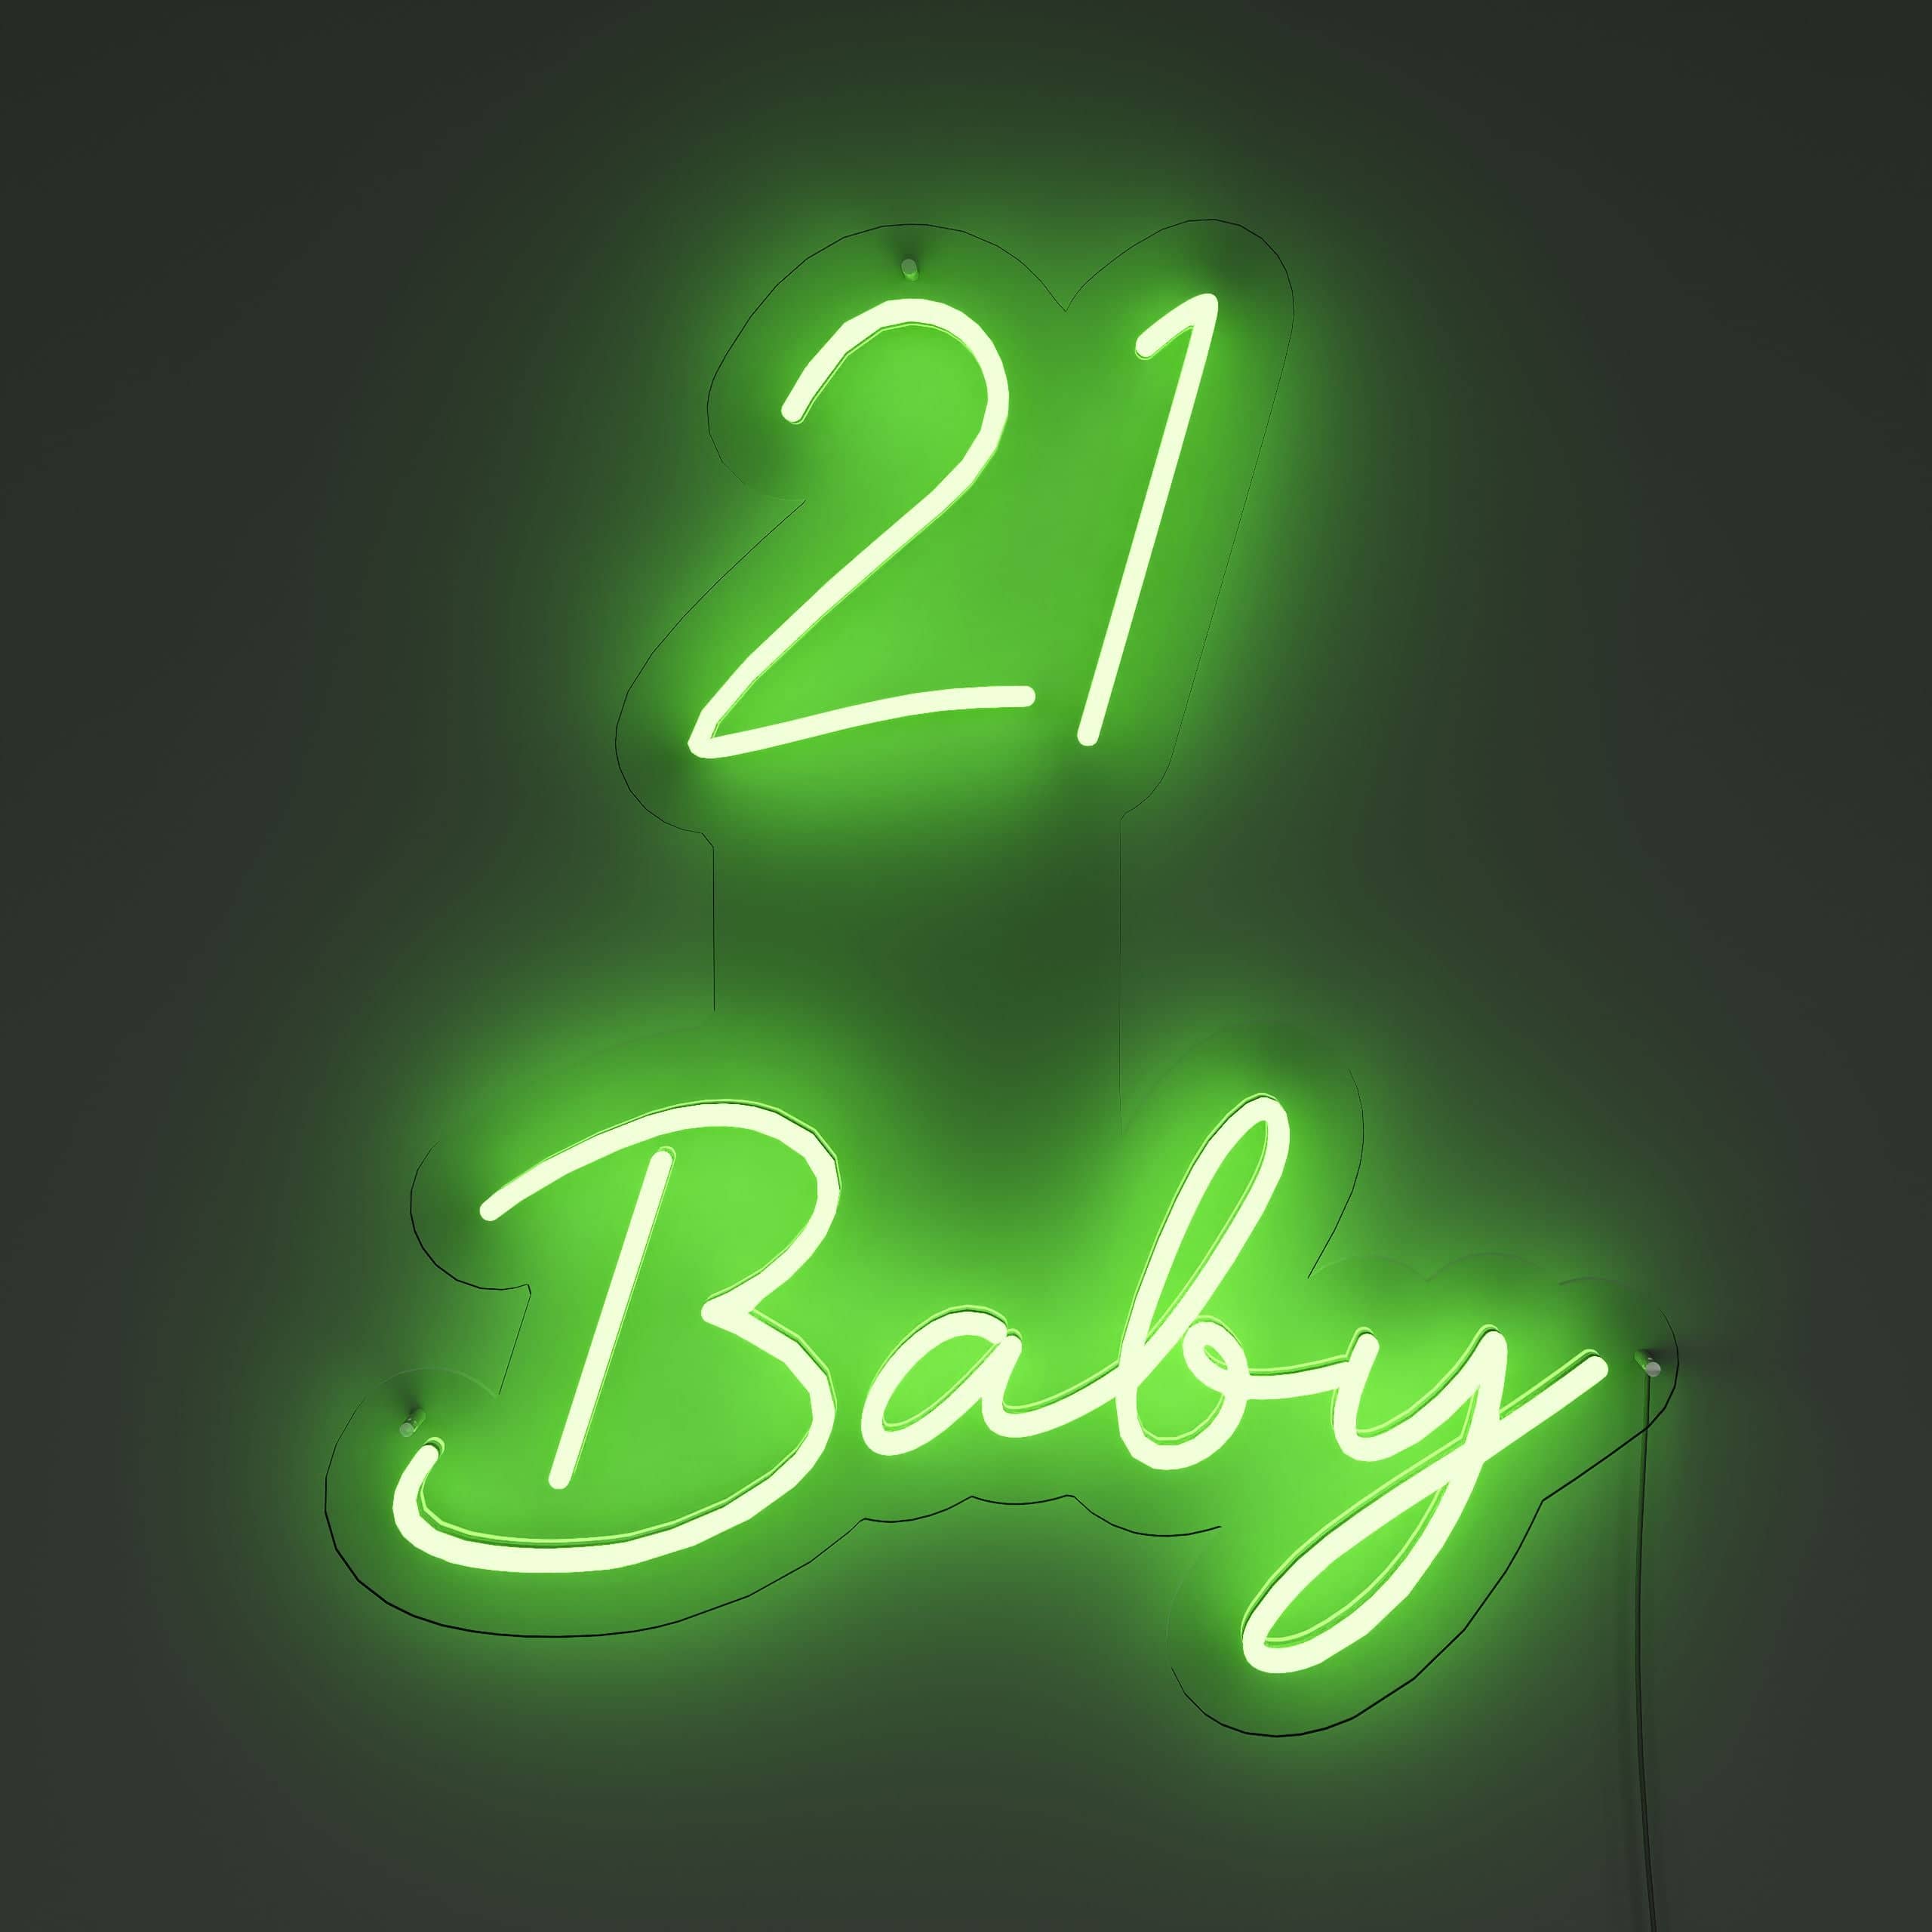 celebrate-the-milestone-of-21-years!-neon-sign-lite